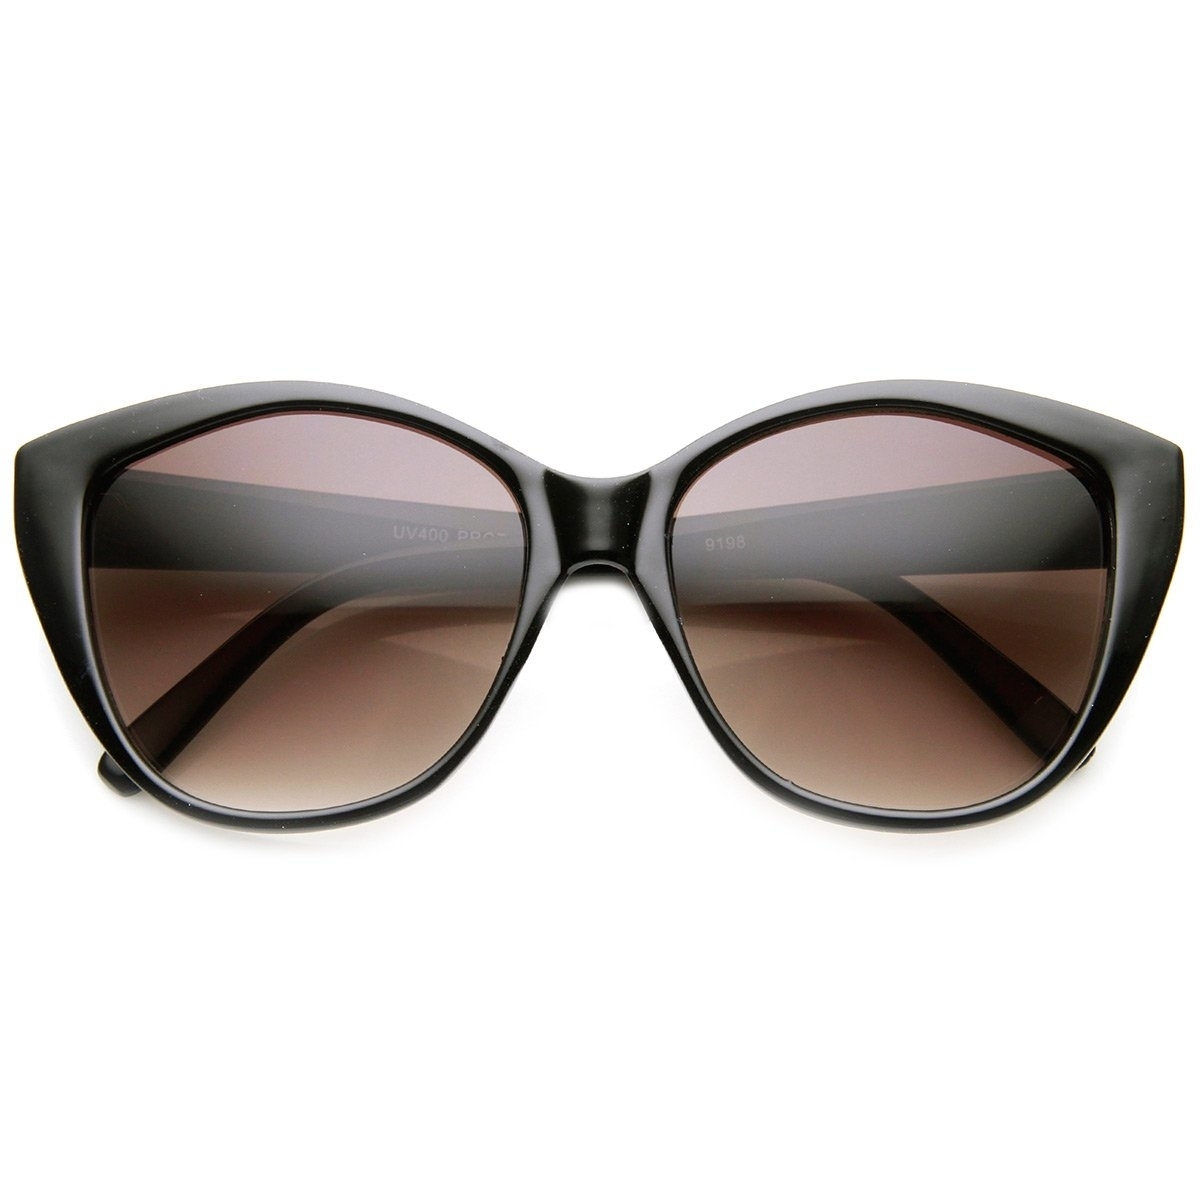 Womens Oversized Oval Mod Glam High Fashion Sunglasses - Black Lavender